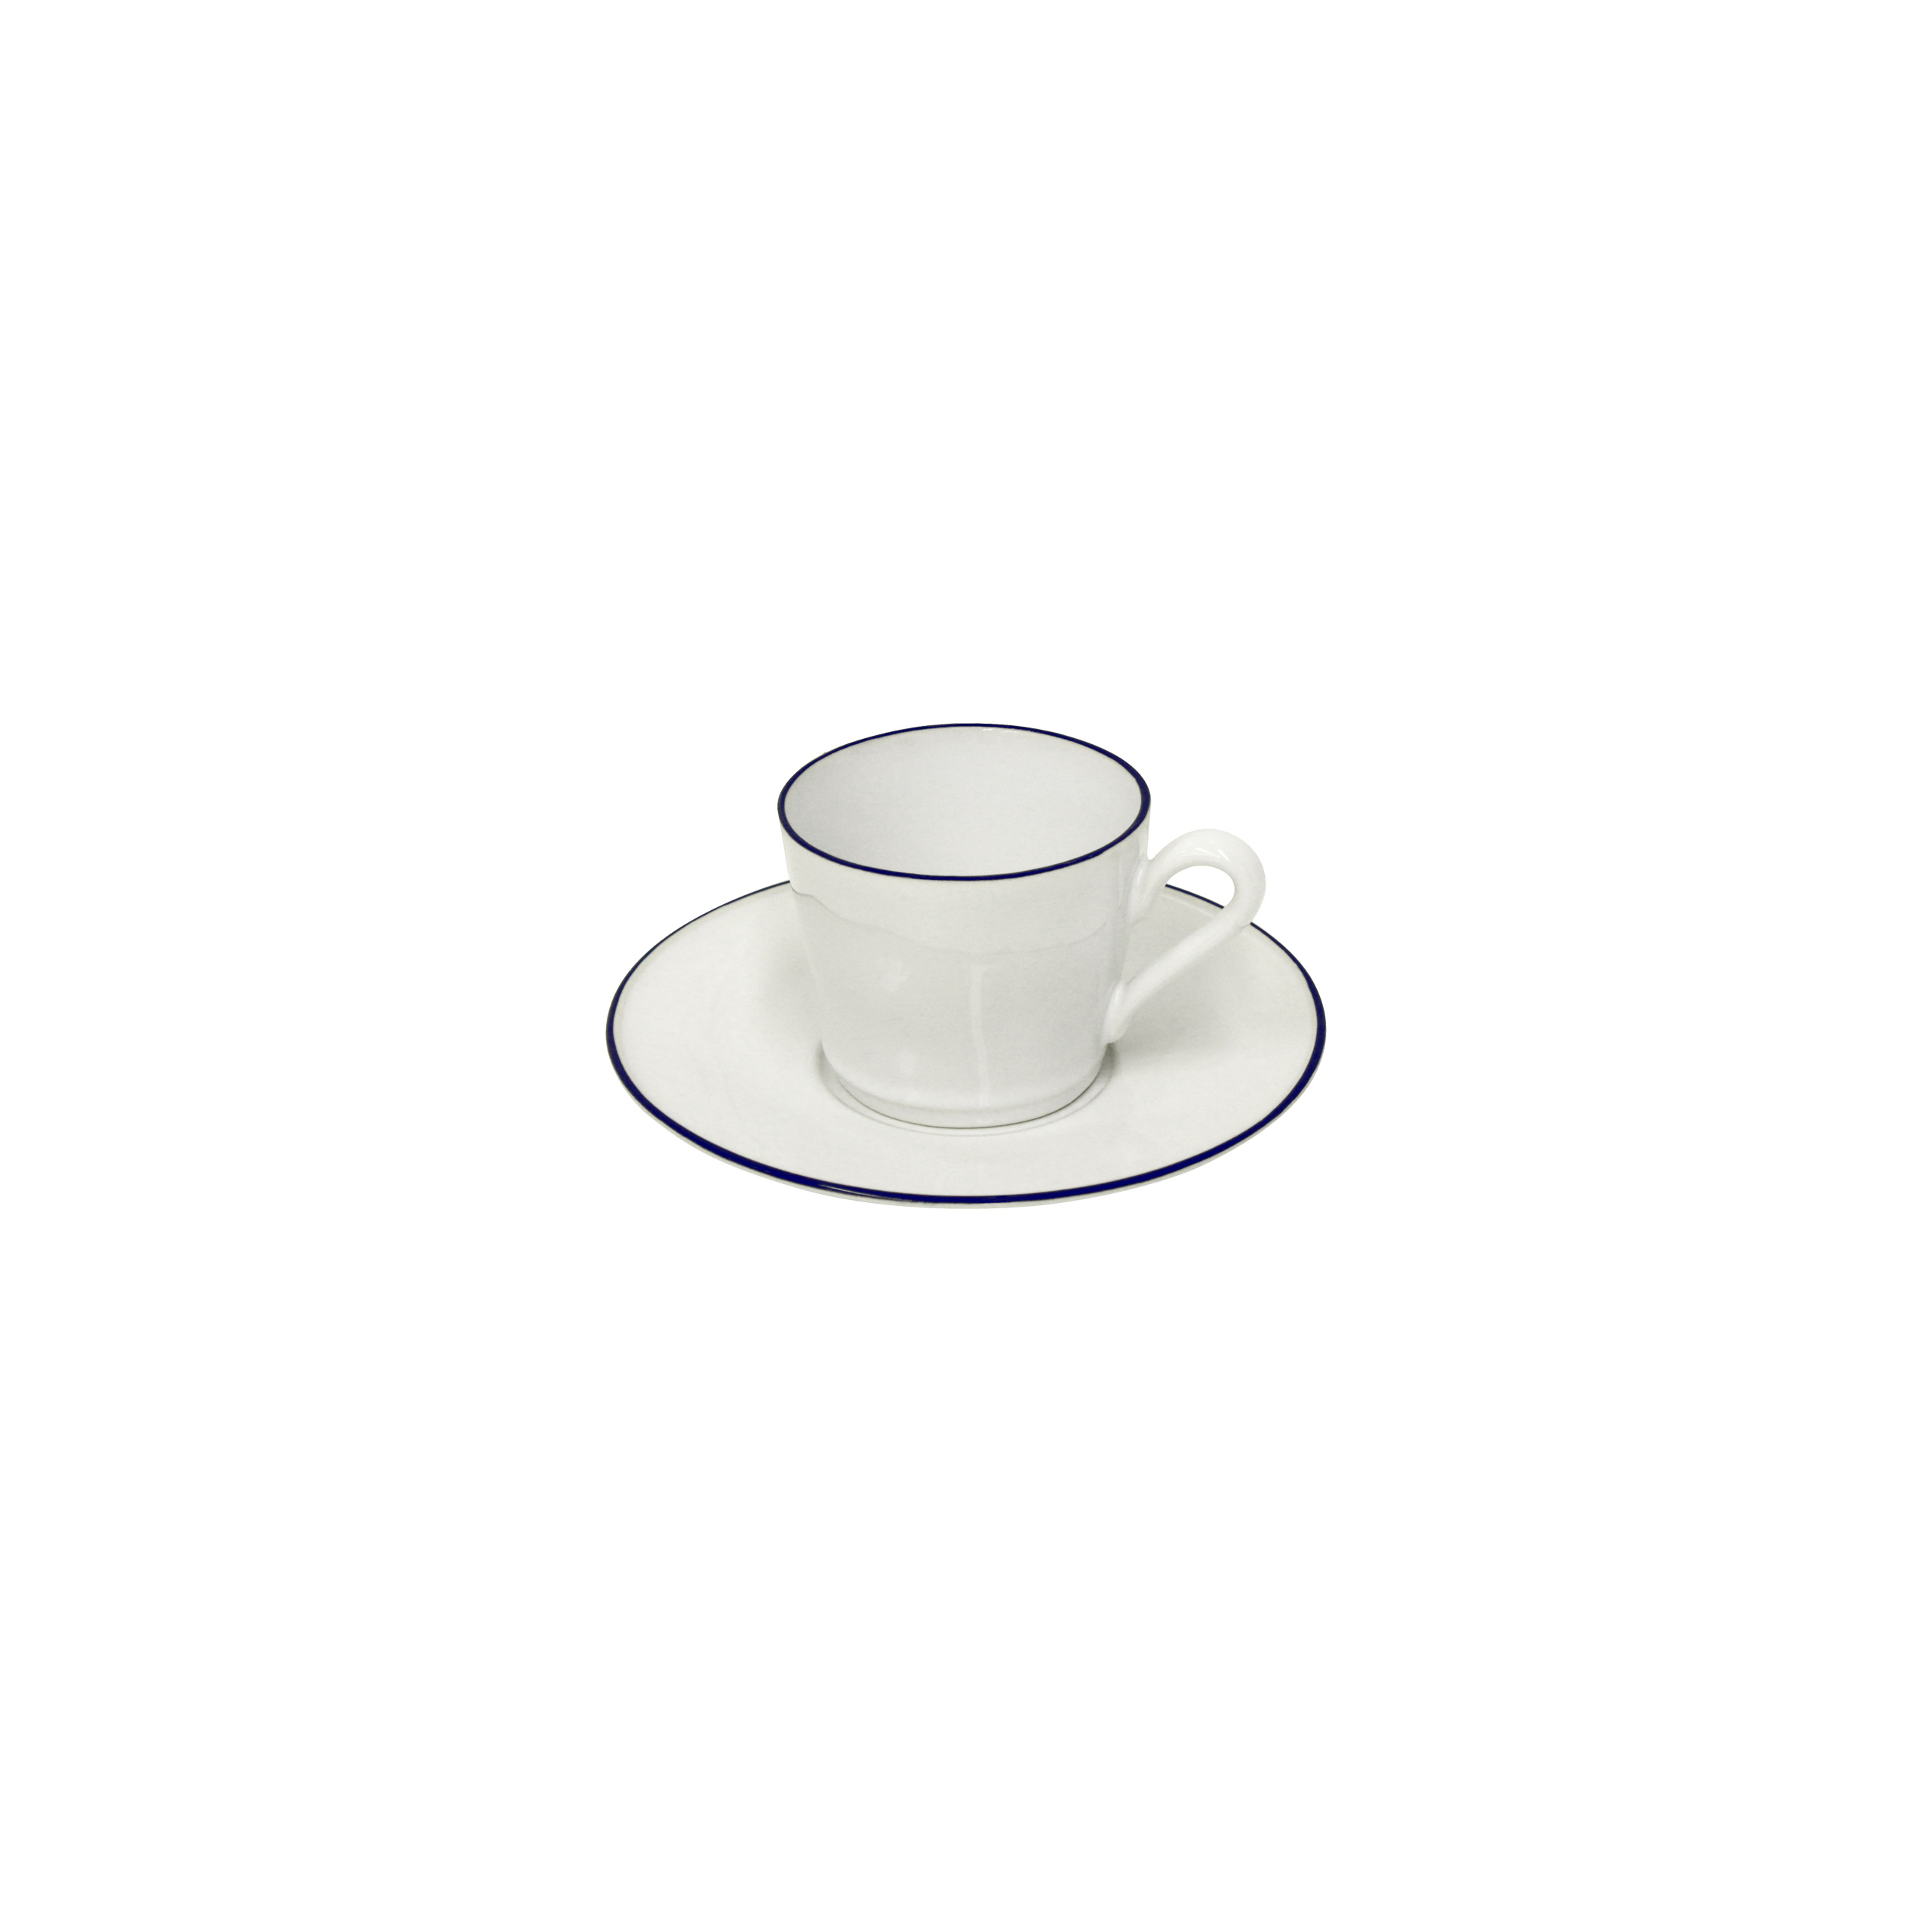 Beja White/blue Tea Cup & Saucer 0.18l Gift